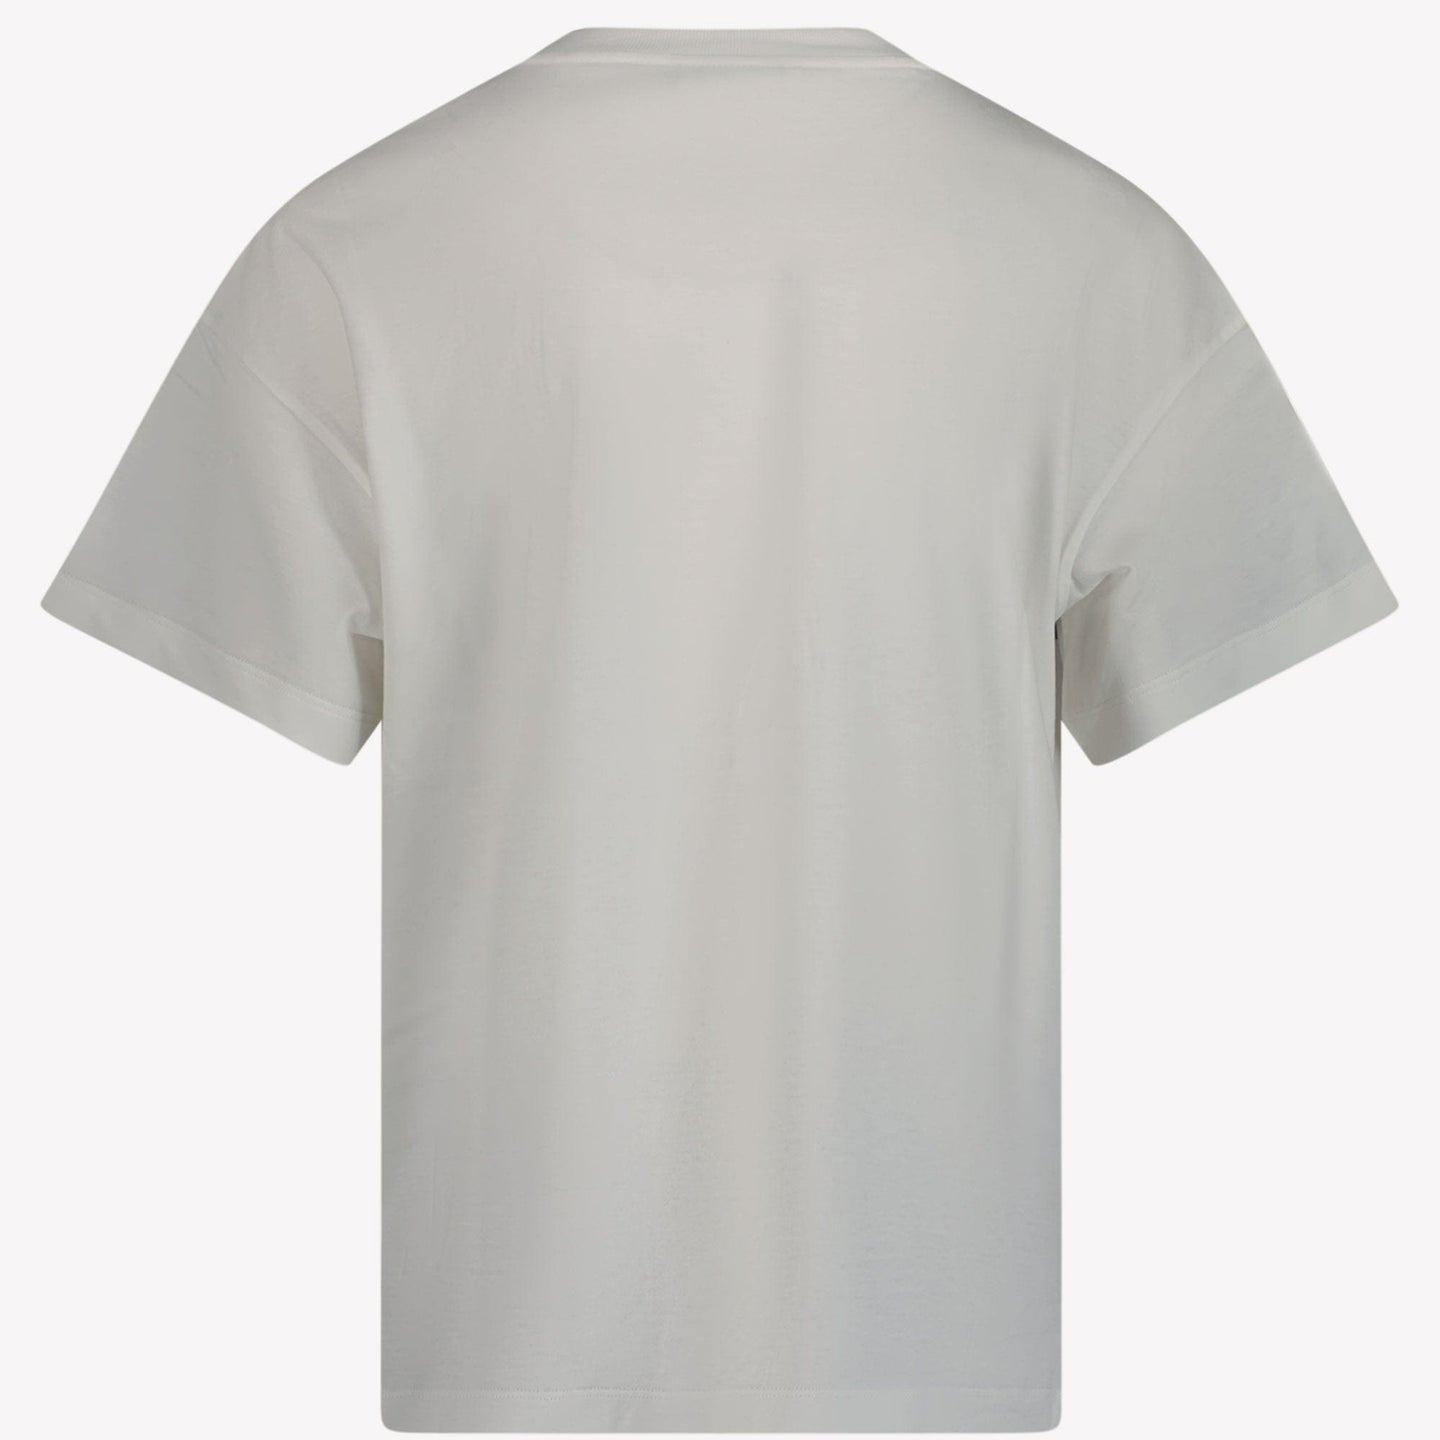 Fendi Unisex T-shirt Wit 3Y